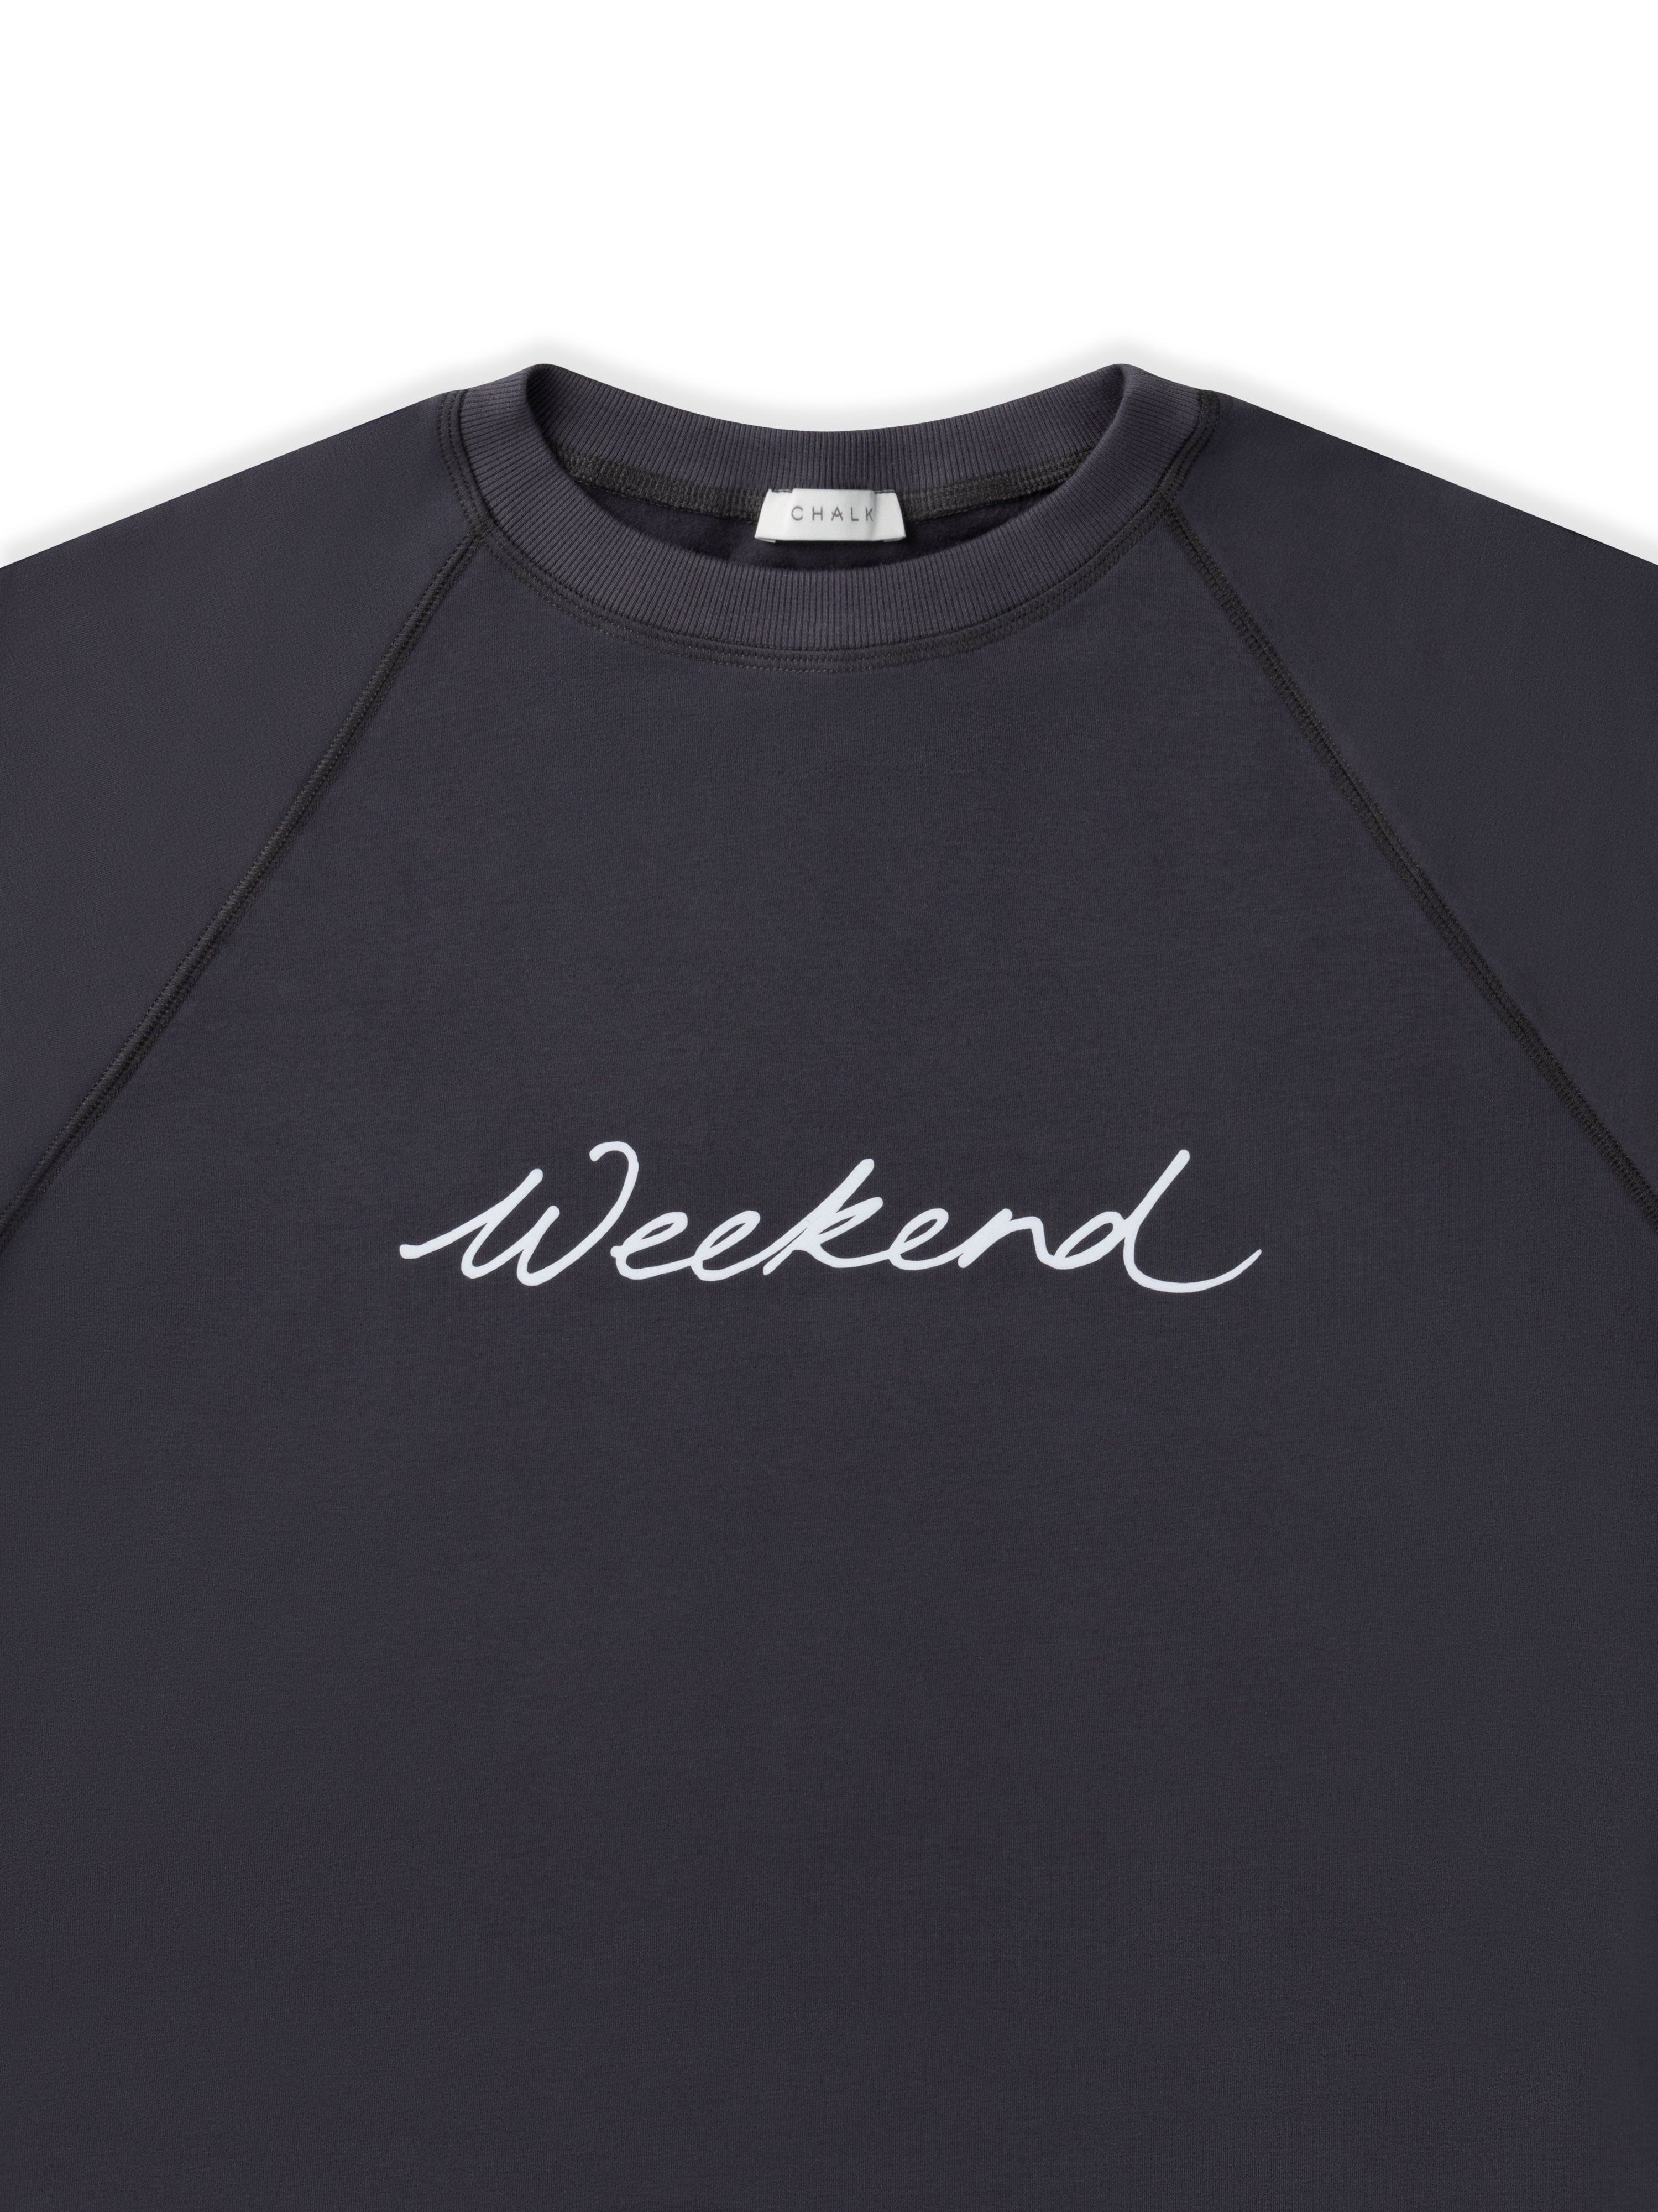 Nancy Weekend Sweatshirt